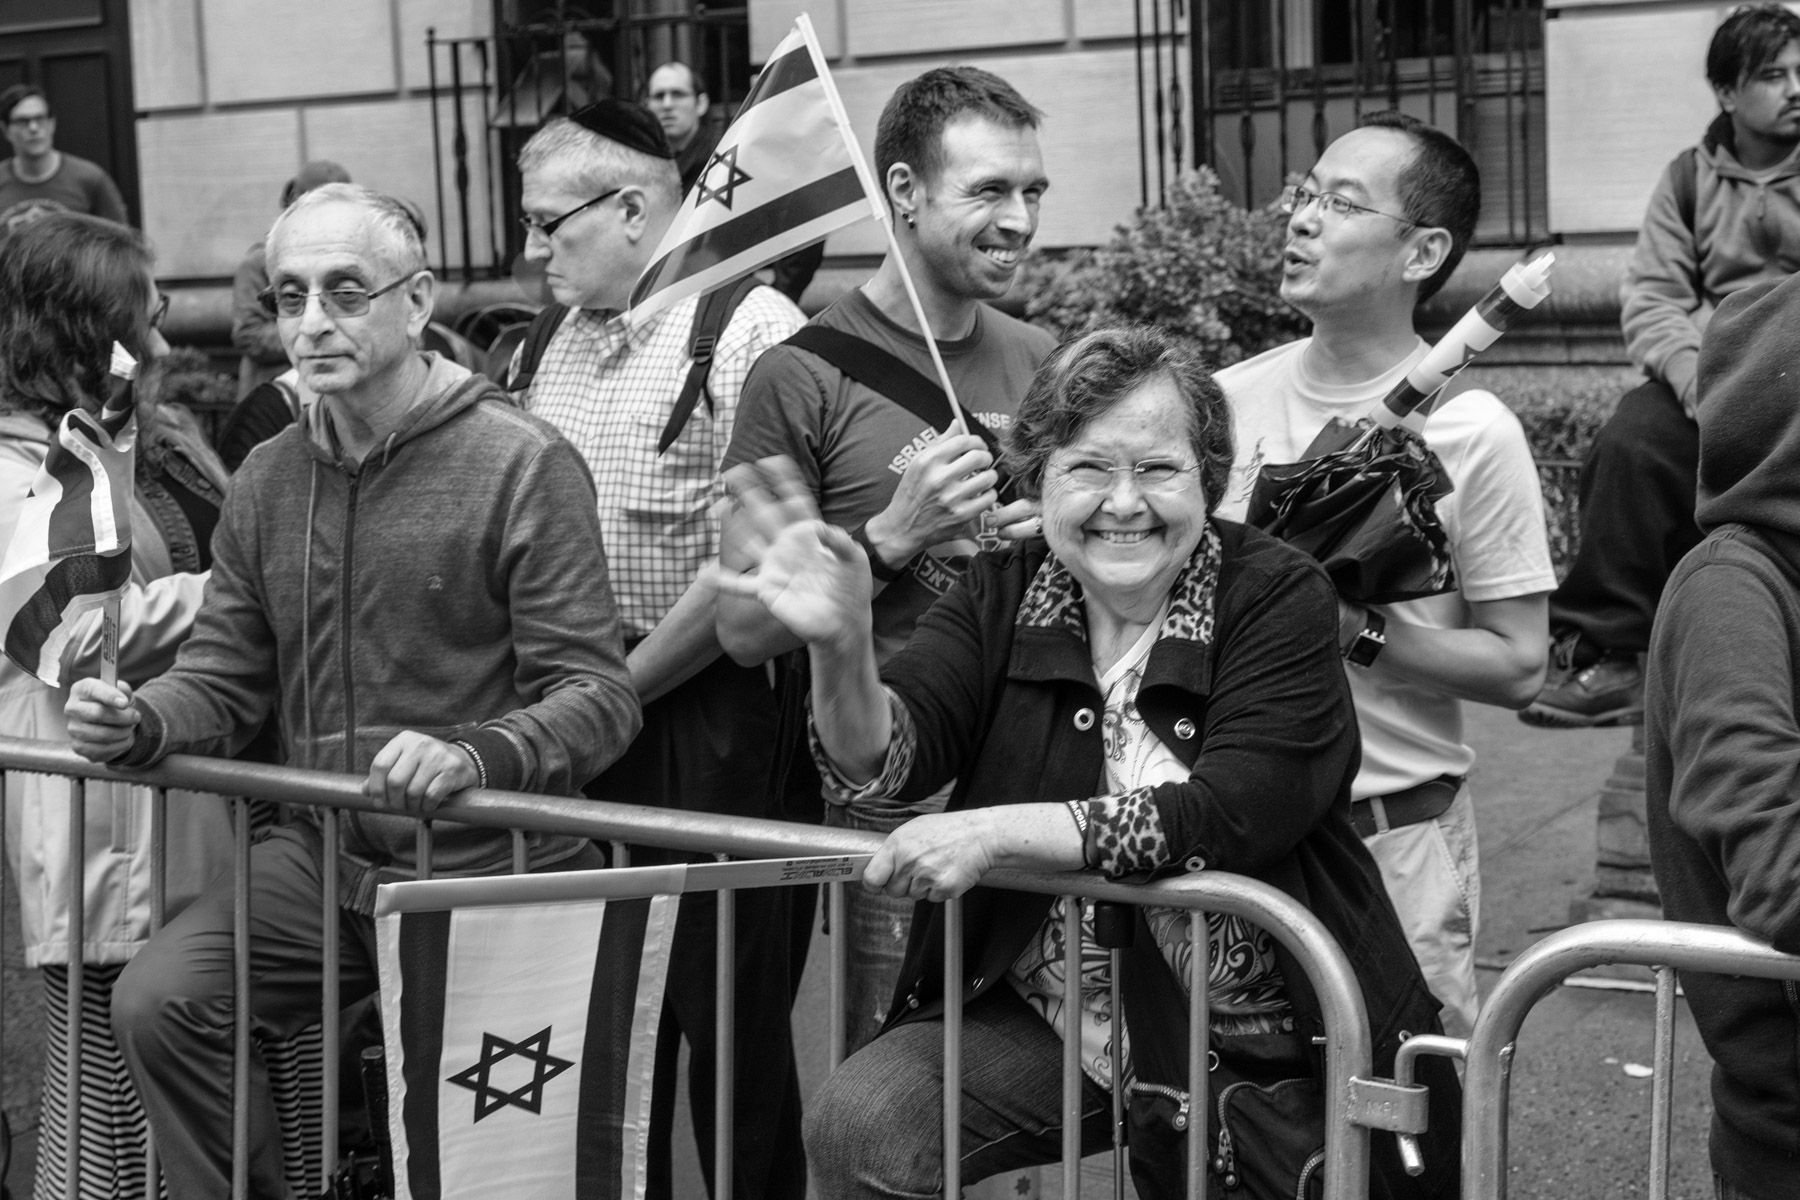 Israel Parade, New York City 06/05/16